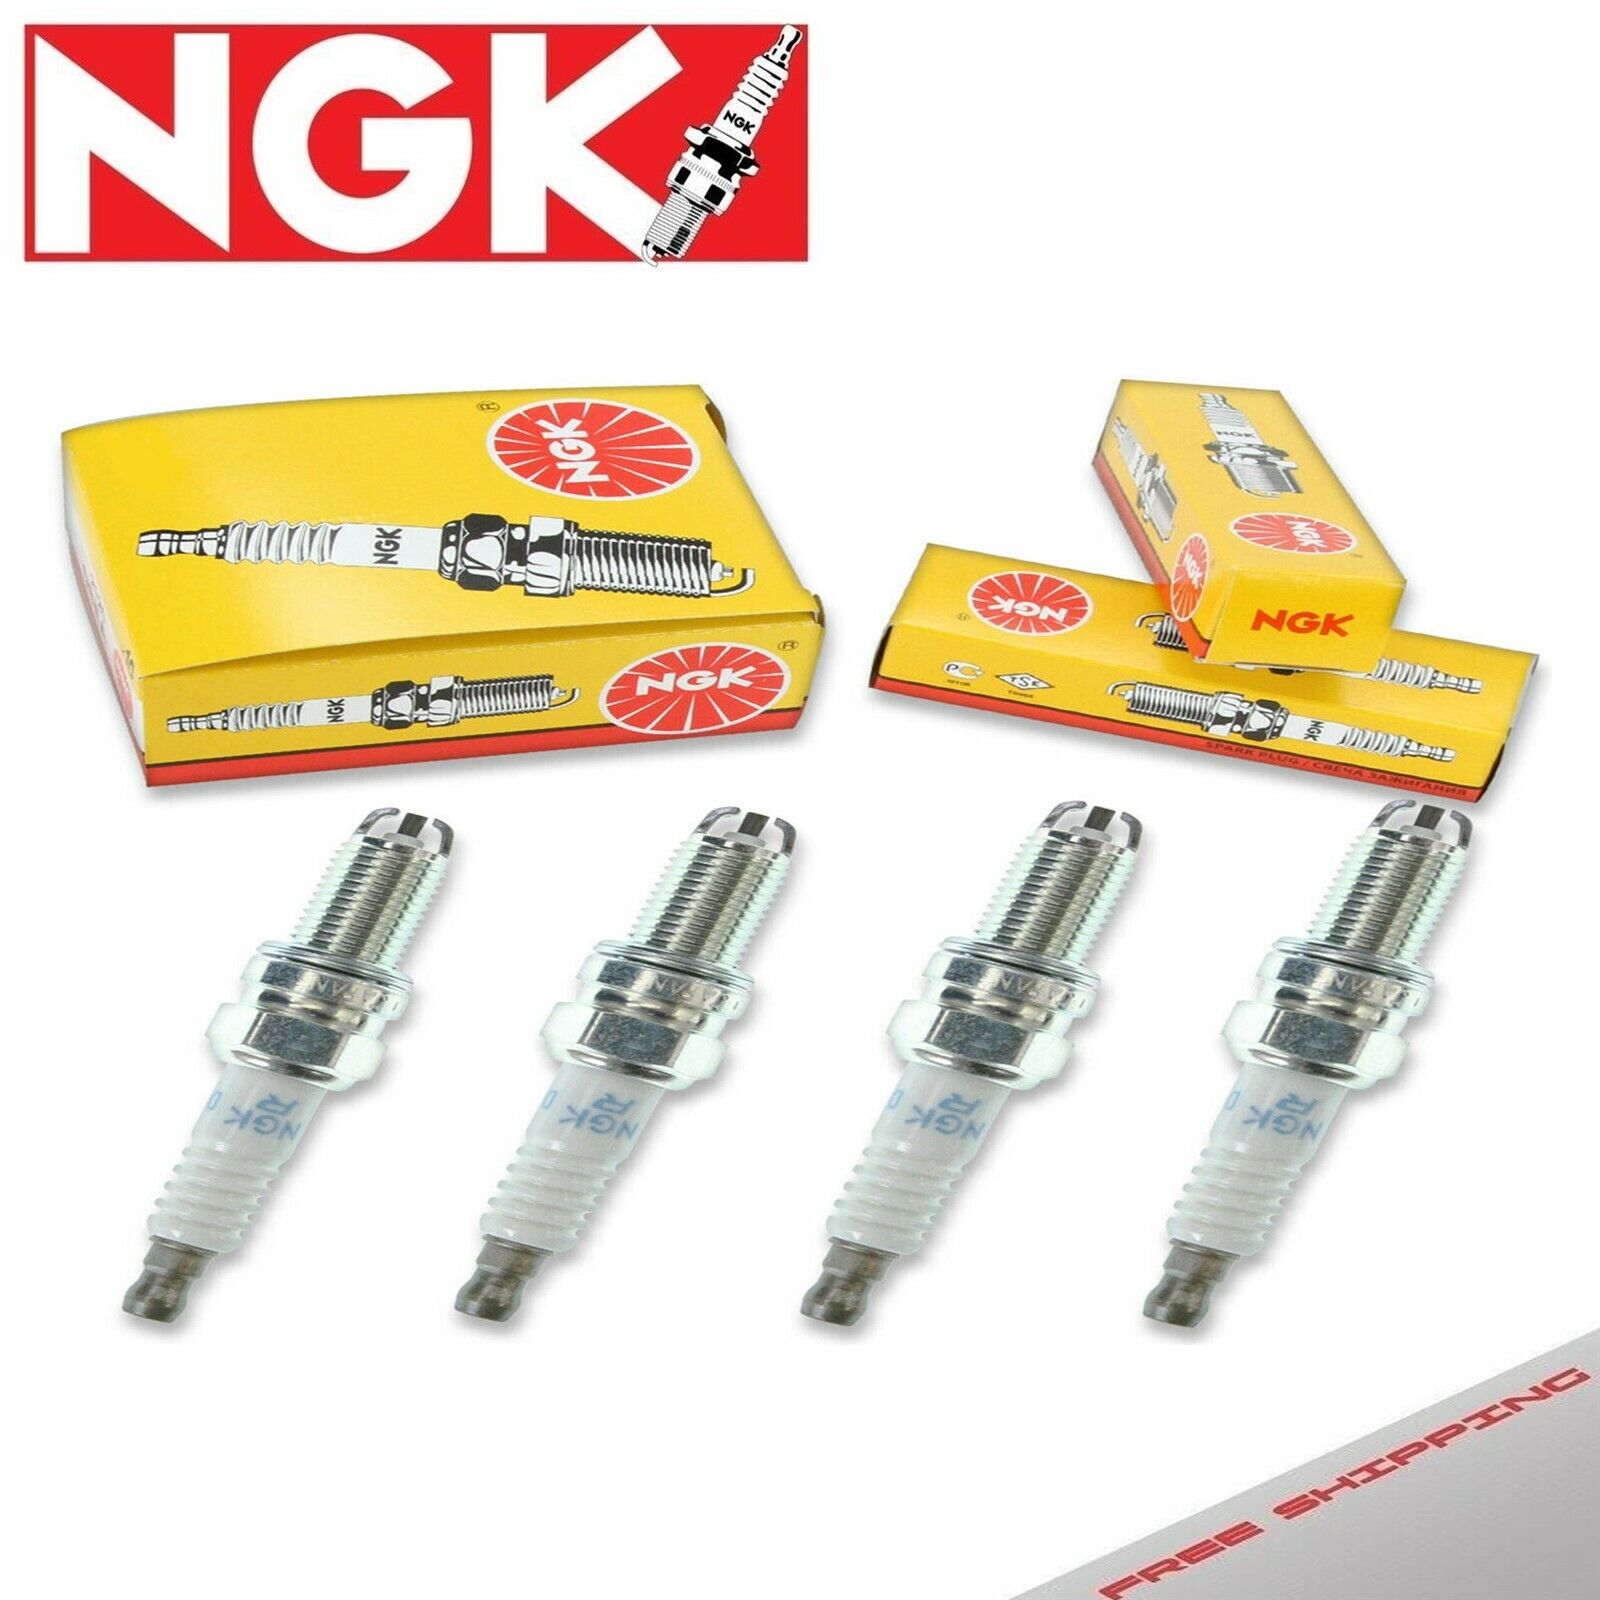 4 pcs NGK Standard Spark Plugs for 1988 Yugo GVS L4-1.1L